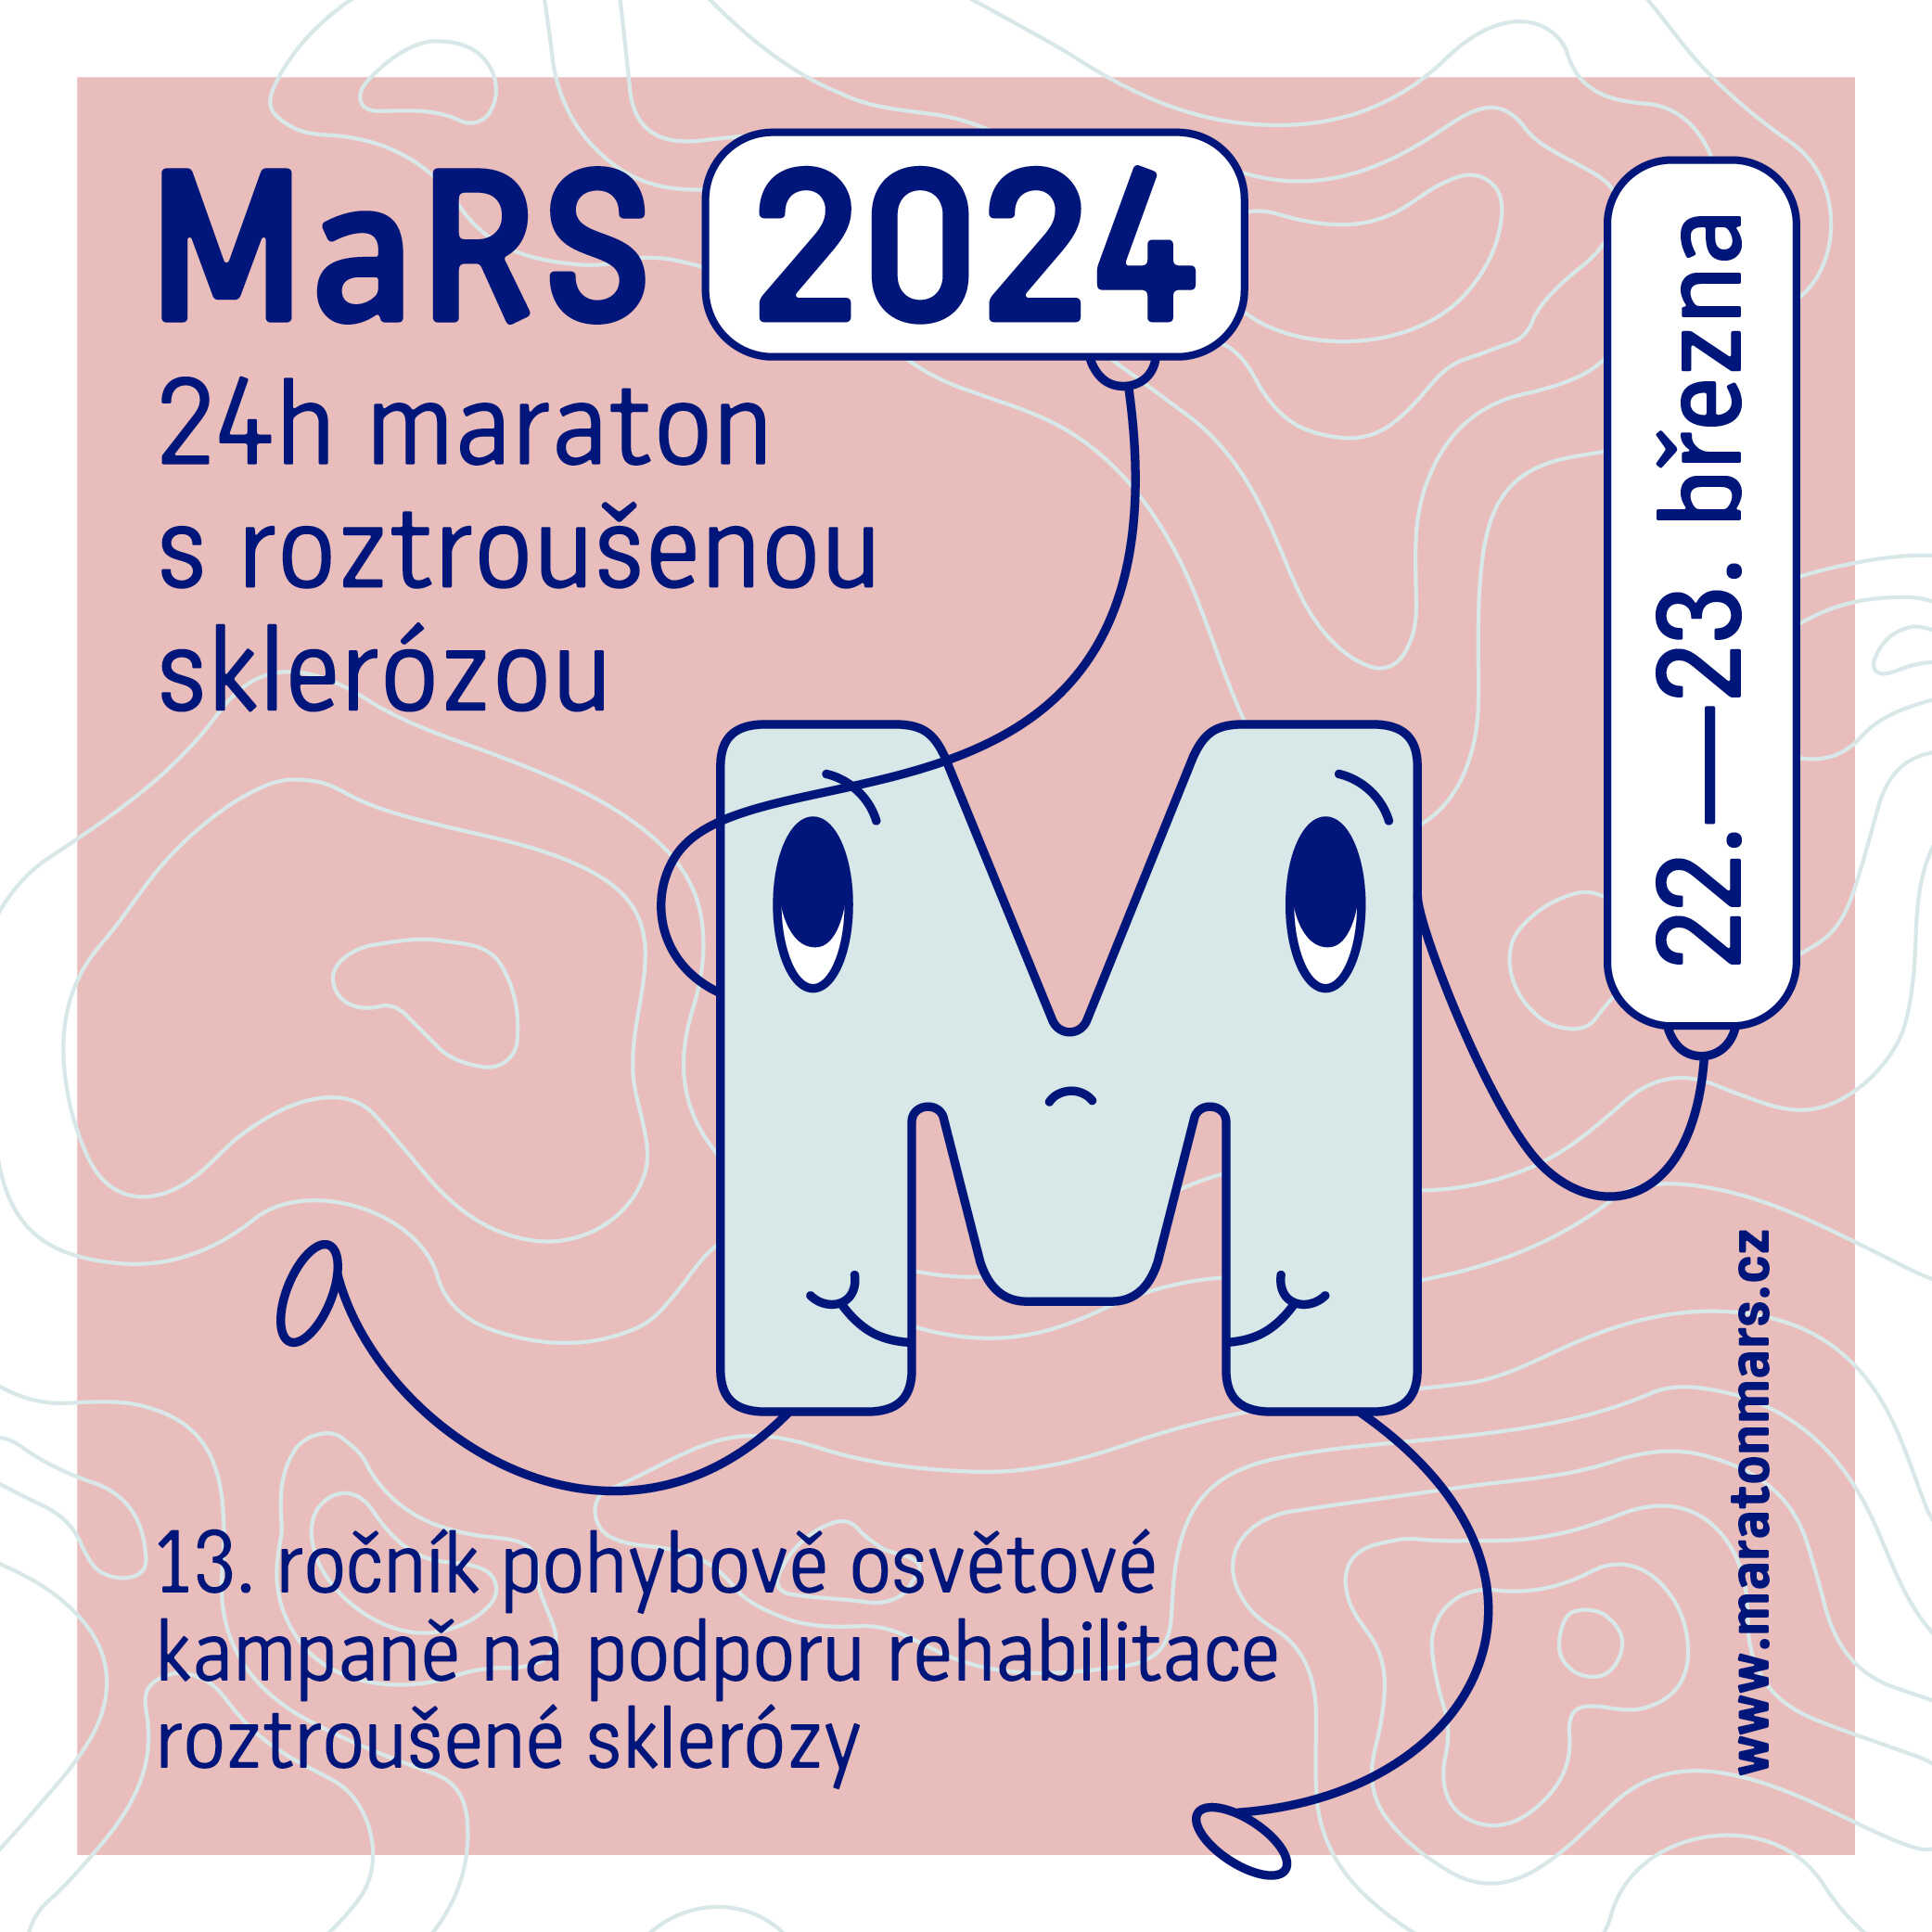 Maraton MaRS 2016 na Slovensku, foto: SZSM